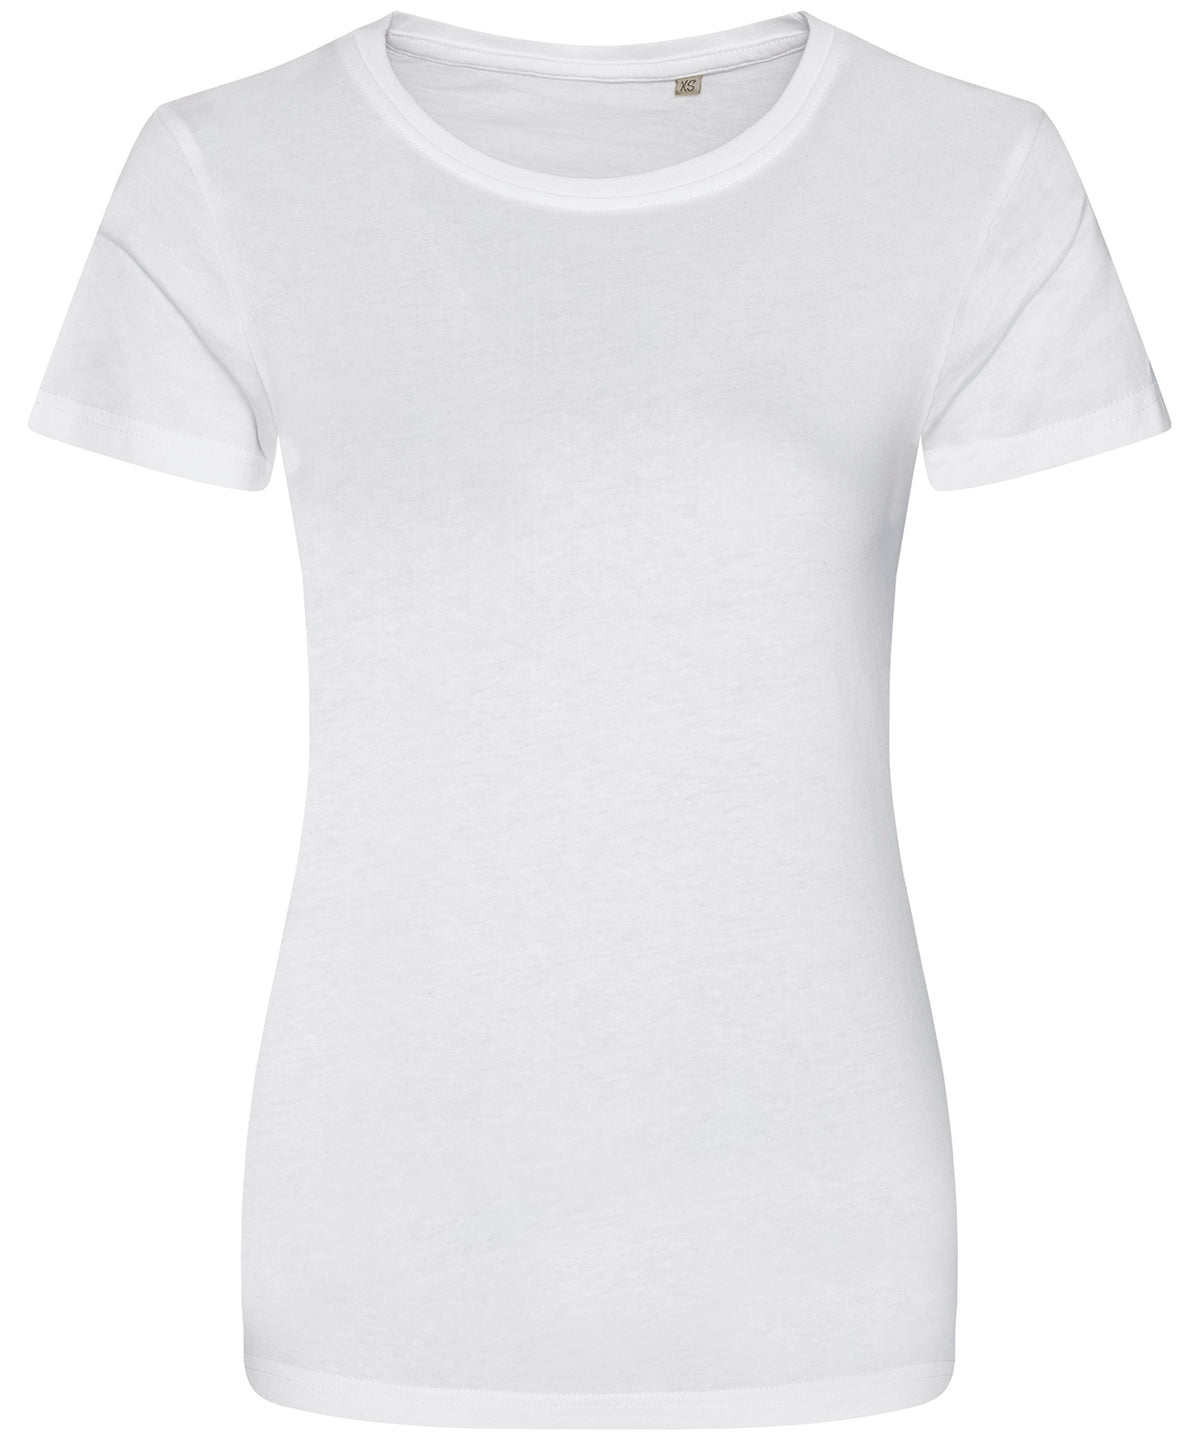 Personalised T-Shirts - White AWDis Ecologie Women's Cascade organic tee